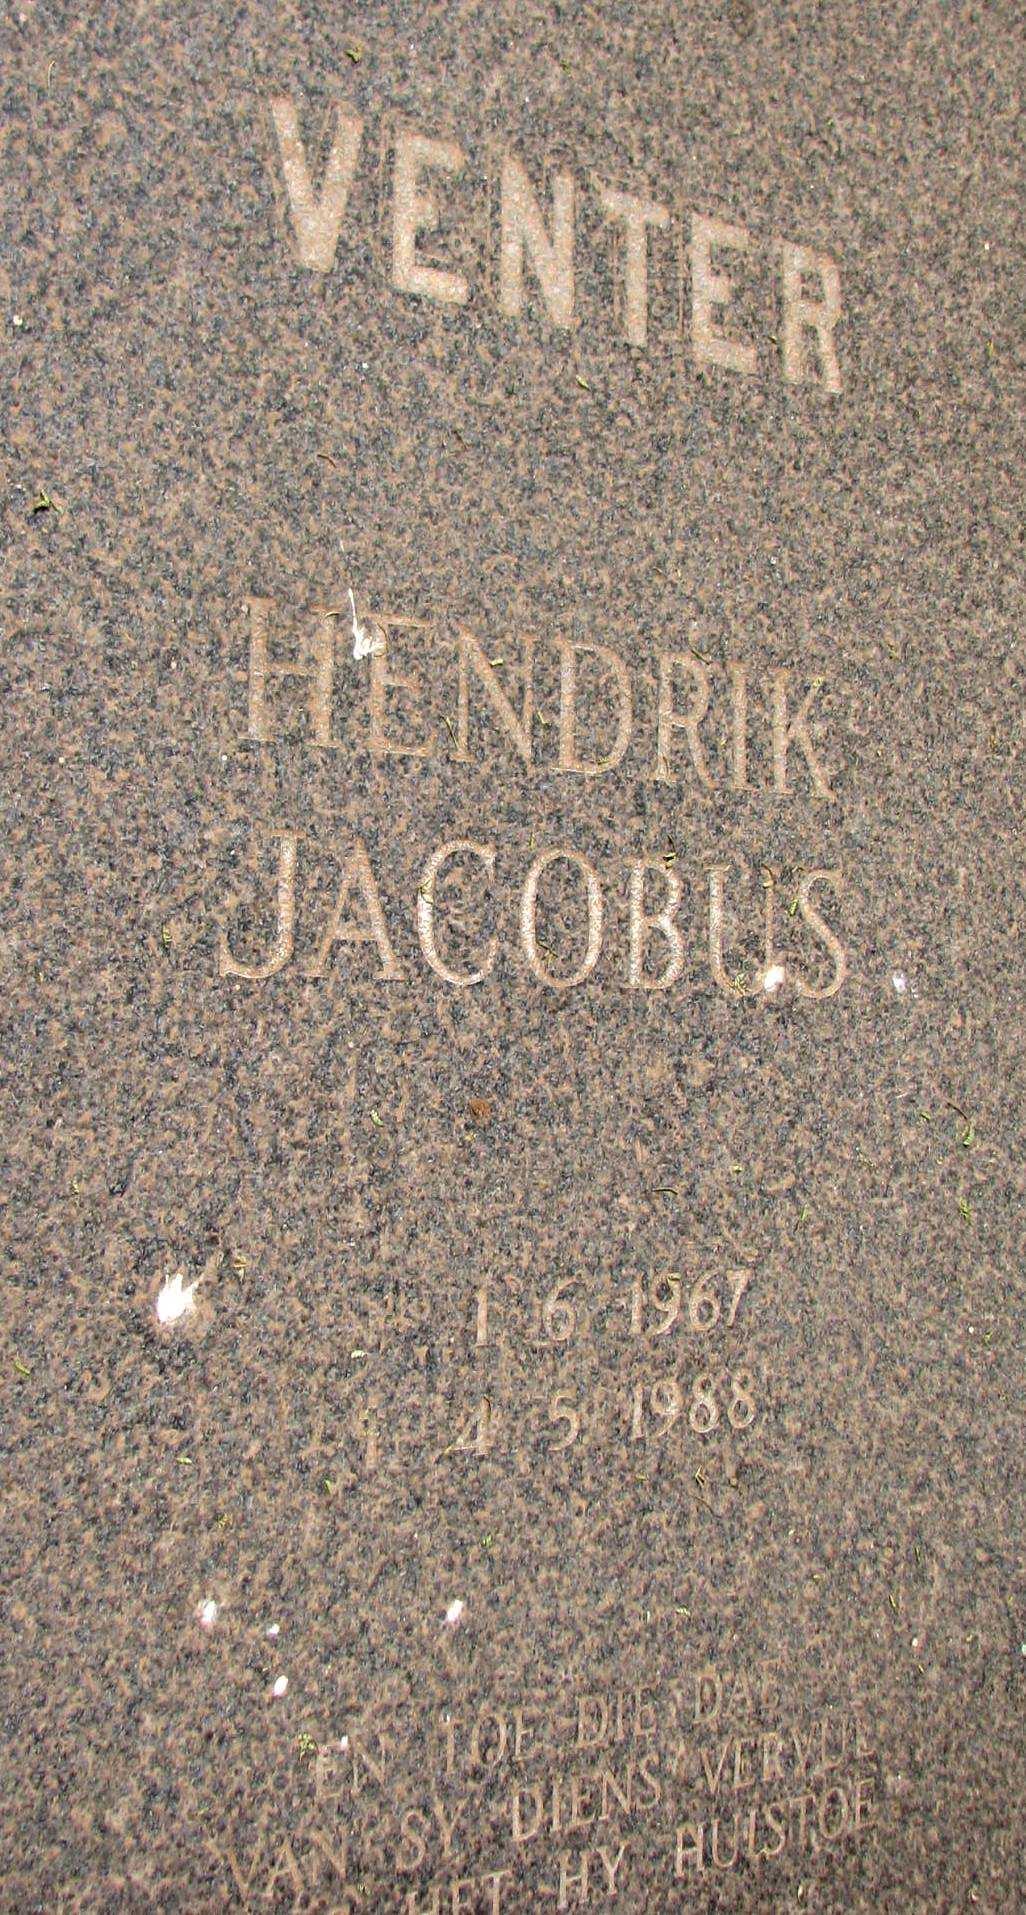 VENTER Hendrik Jacobus 1967-1988